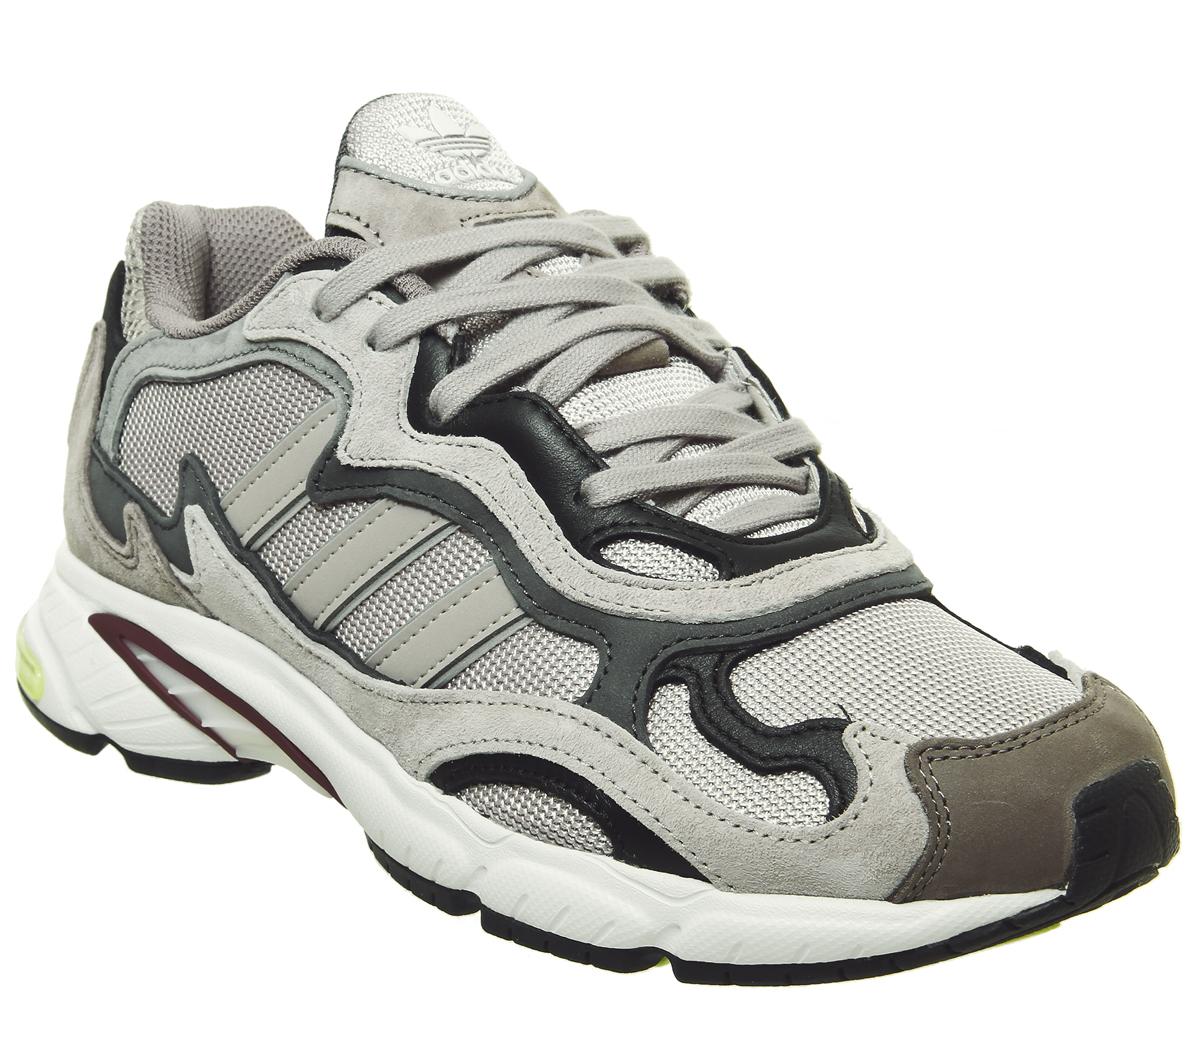 adidas light grey trainers